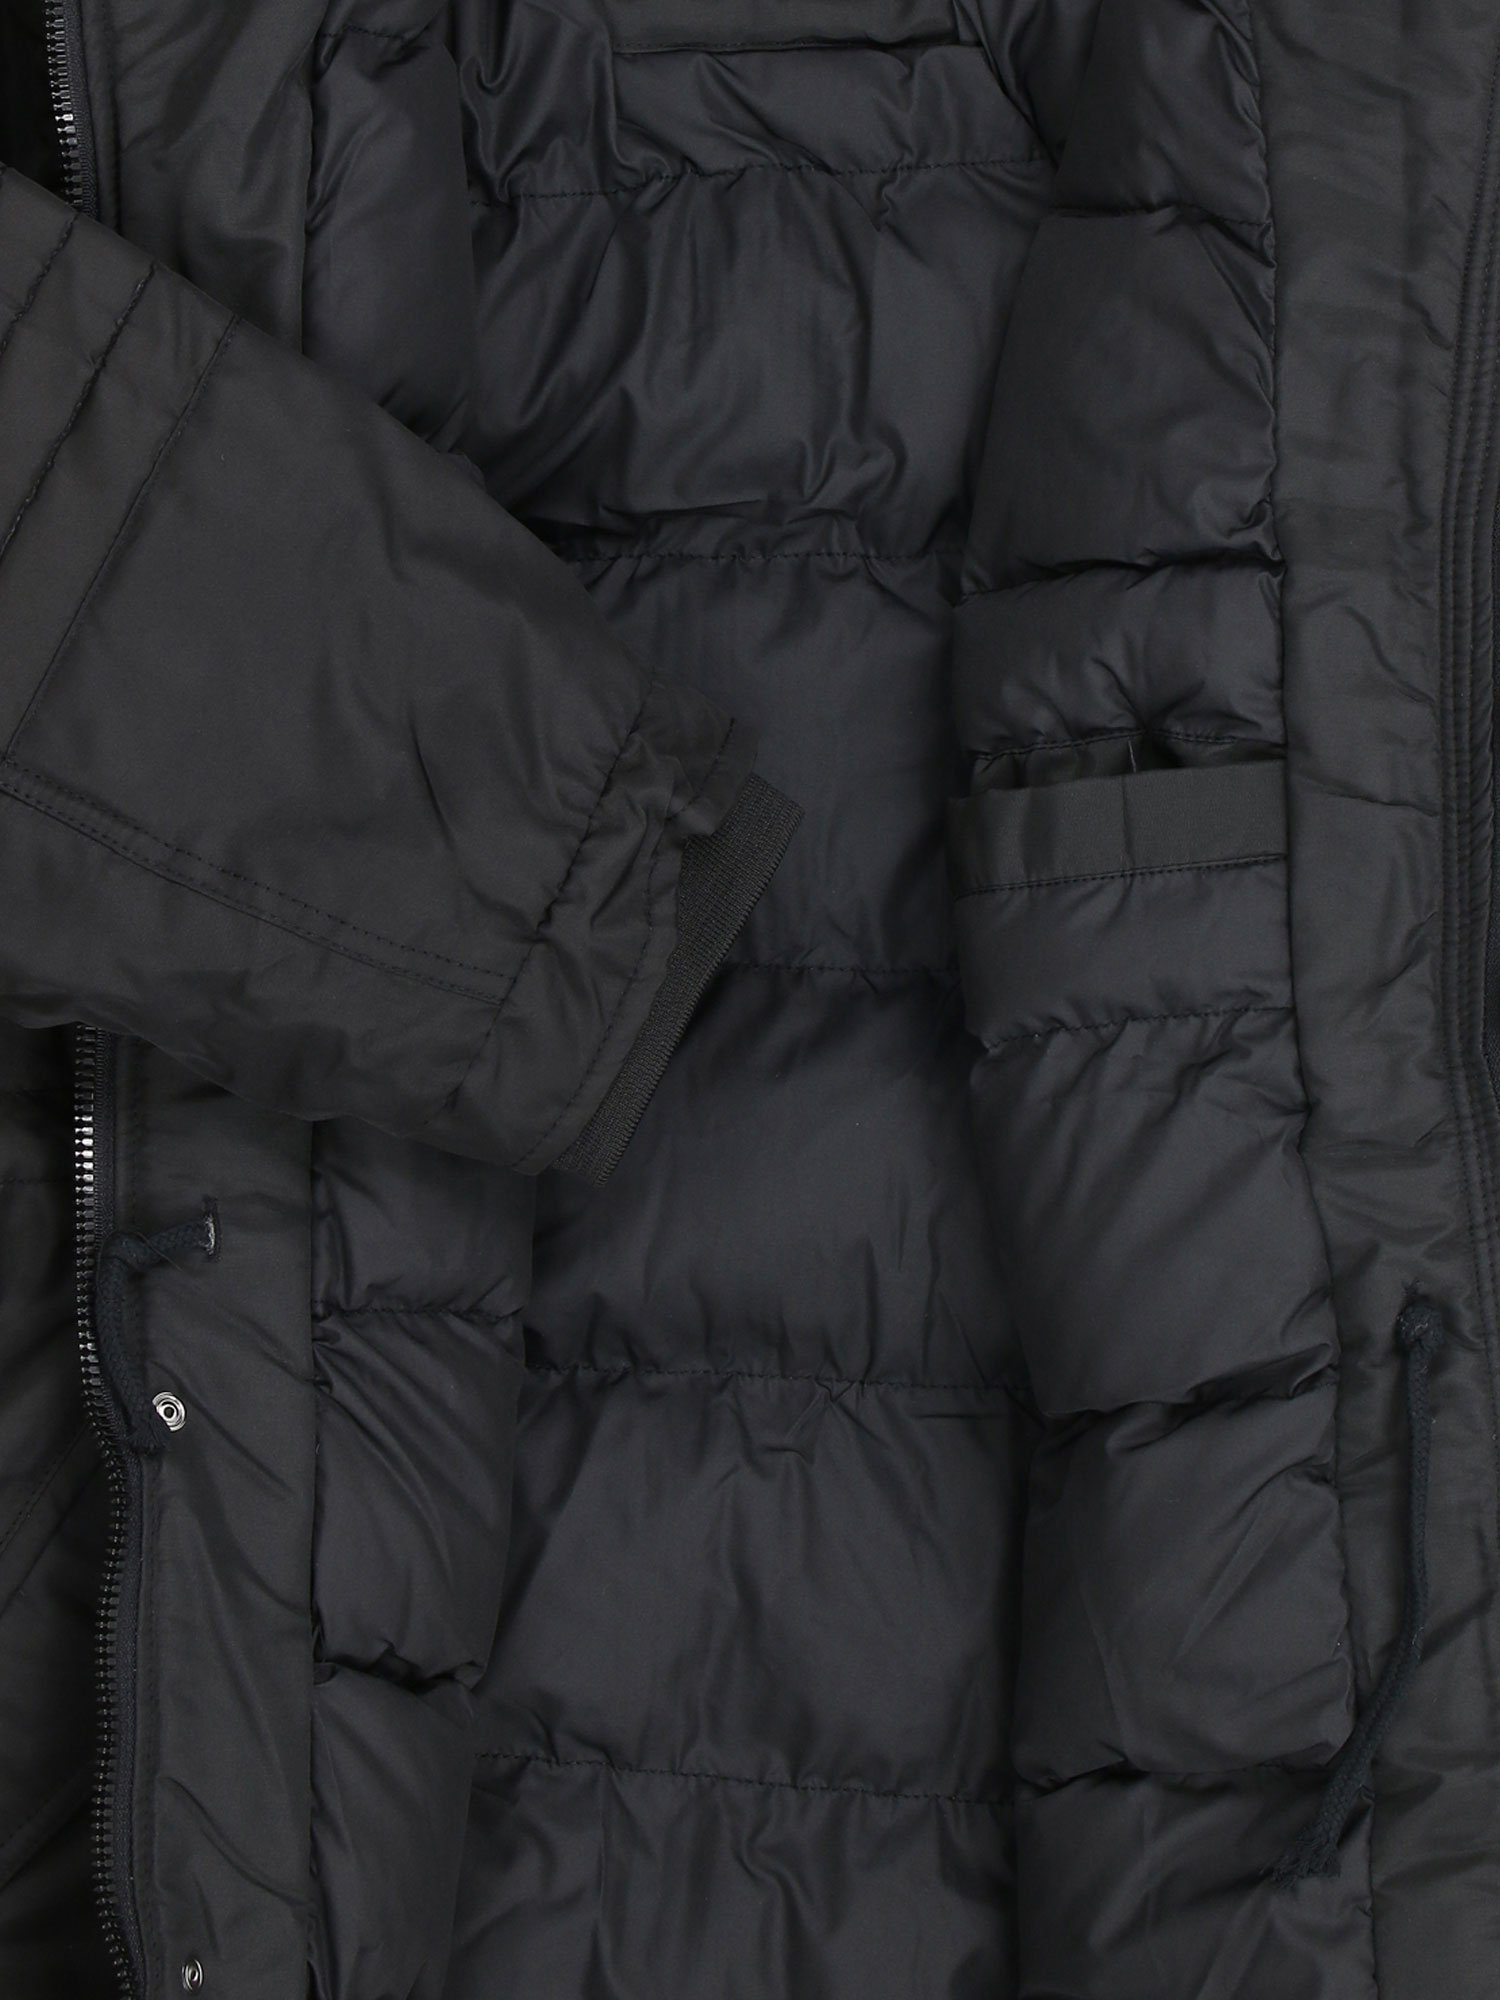 schwarz Lavecchia Winterjacke Kapuze gefütterterter mit Übergrößen abnehmbarer Jacke & LV-700